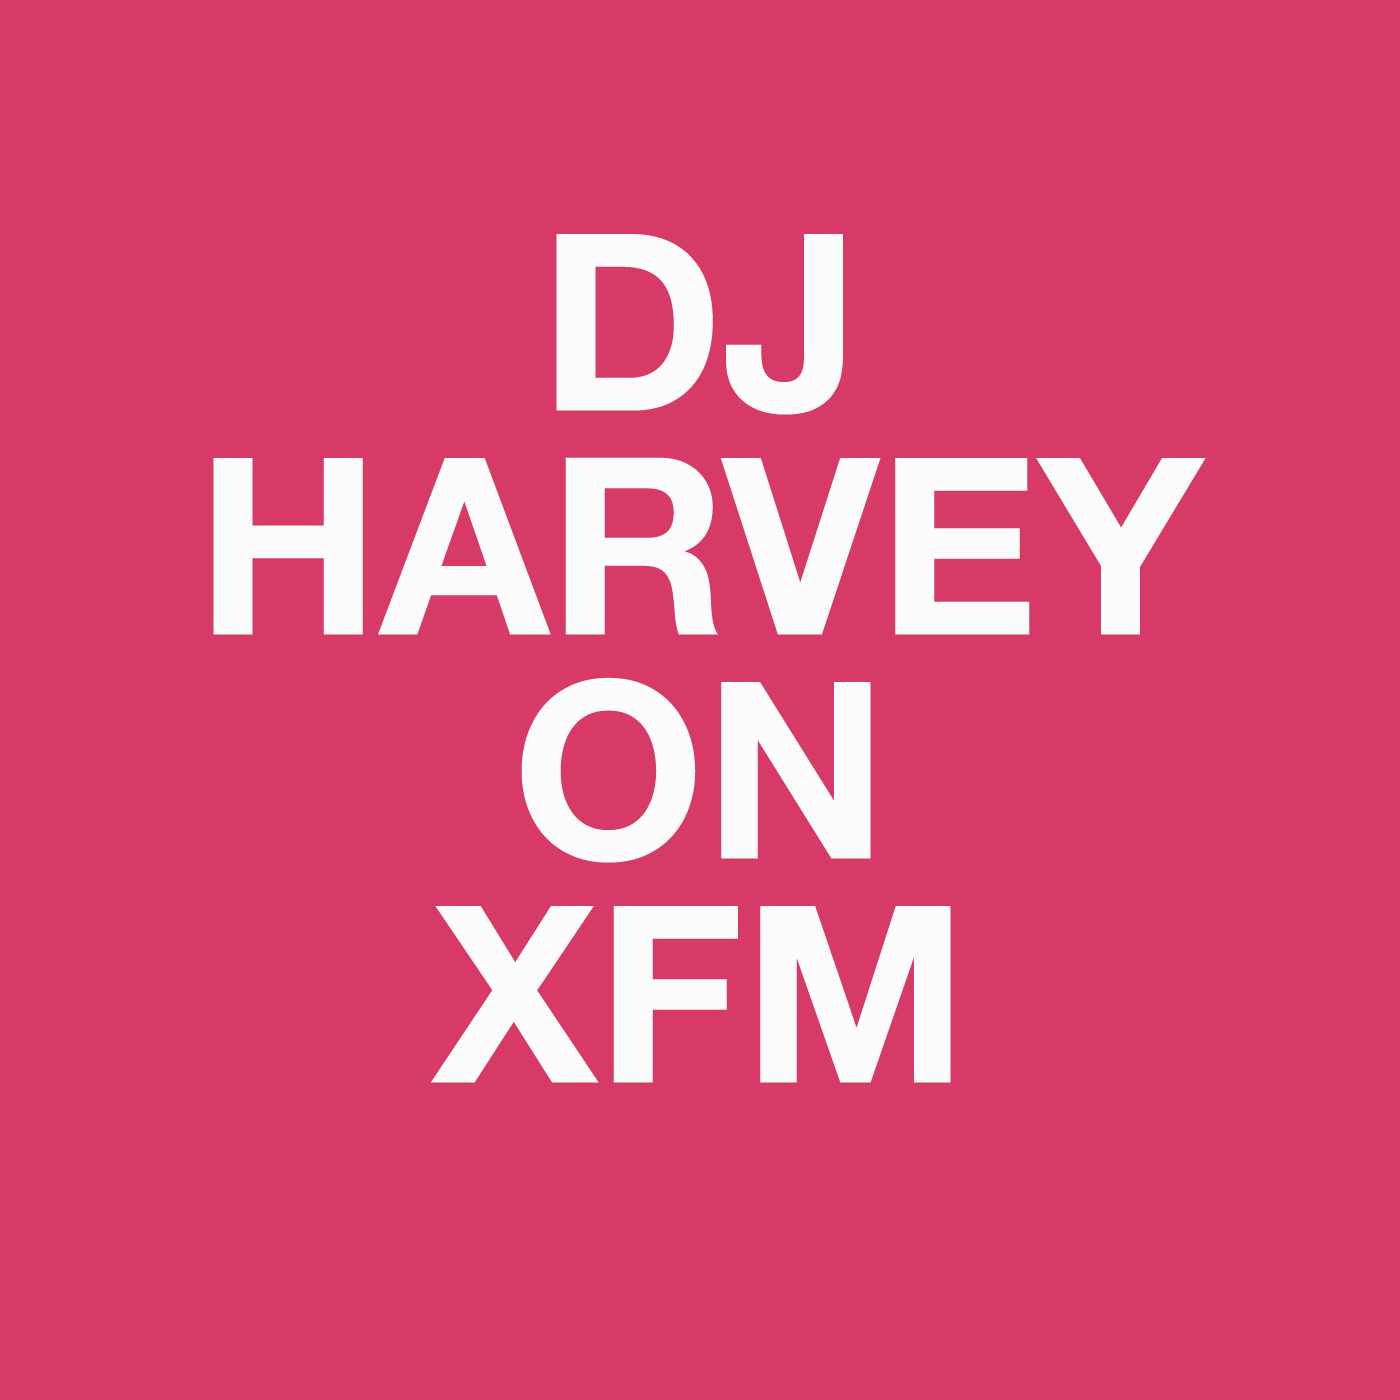 Dj Harvey, XFM, Nuphonic, Radio, Disco, Show